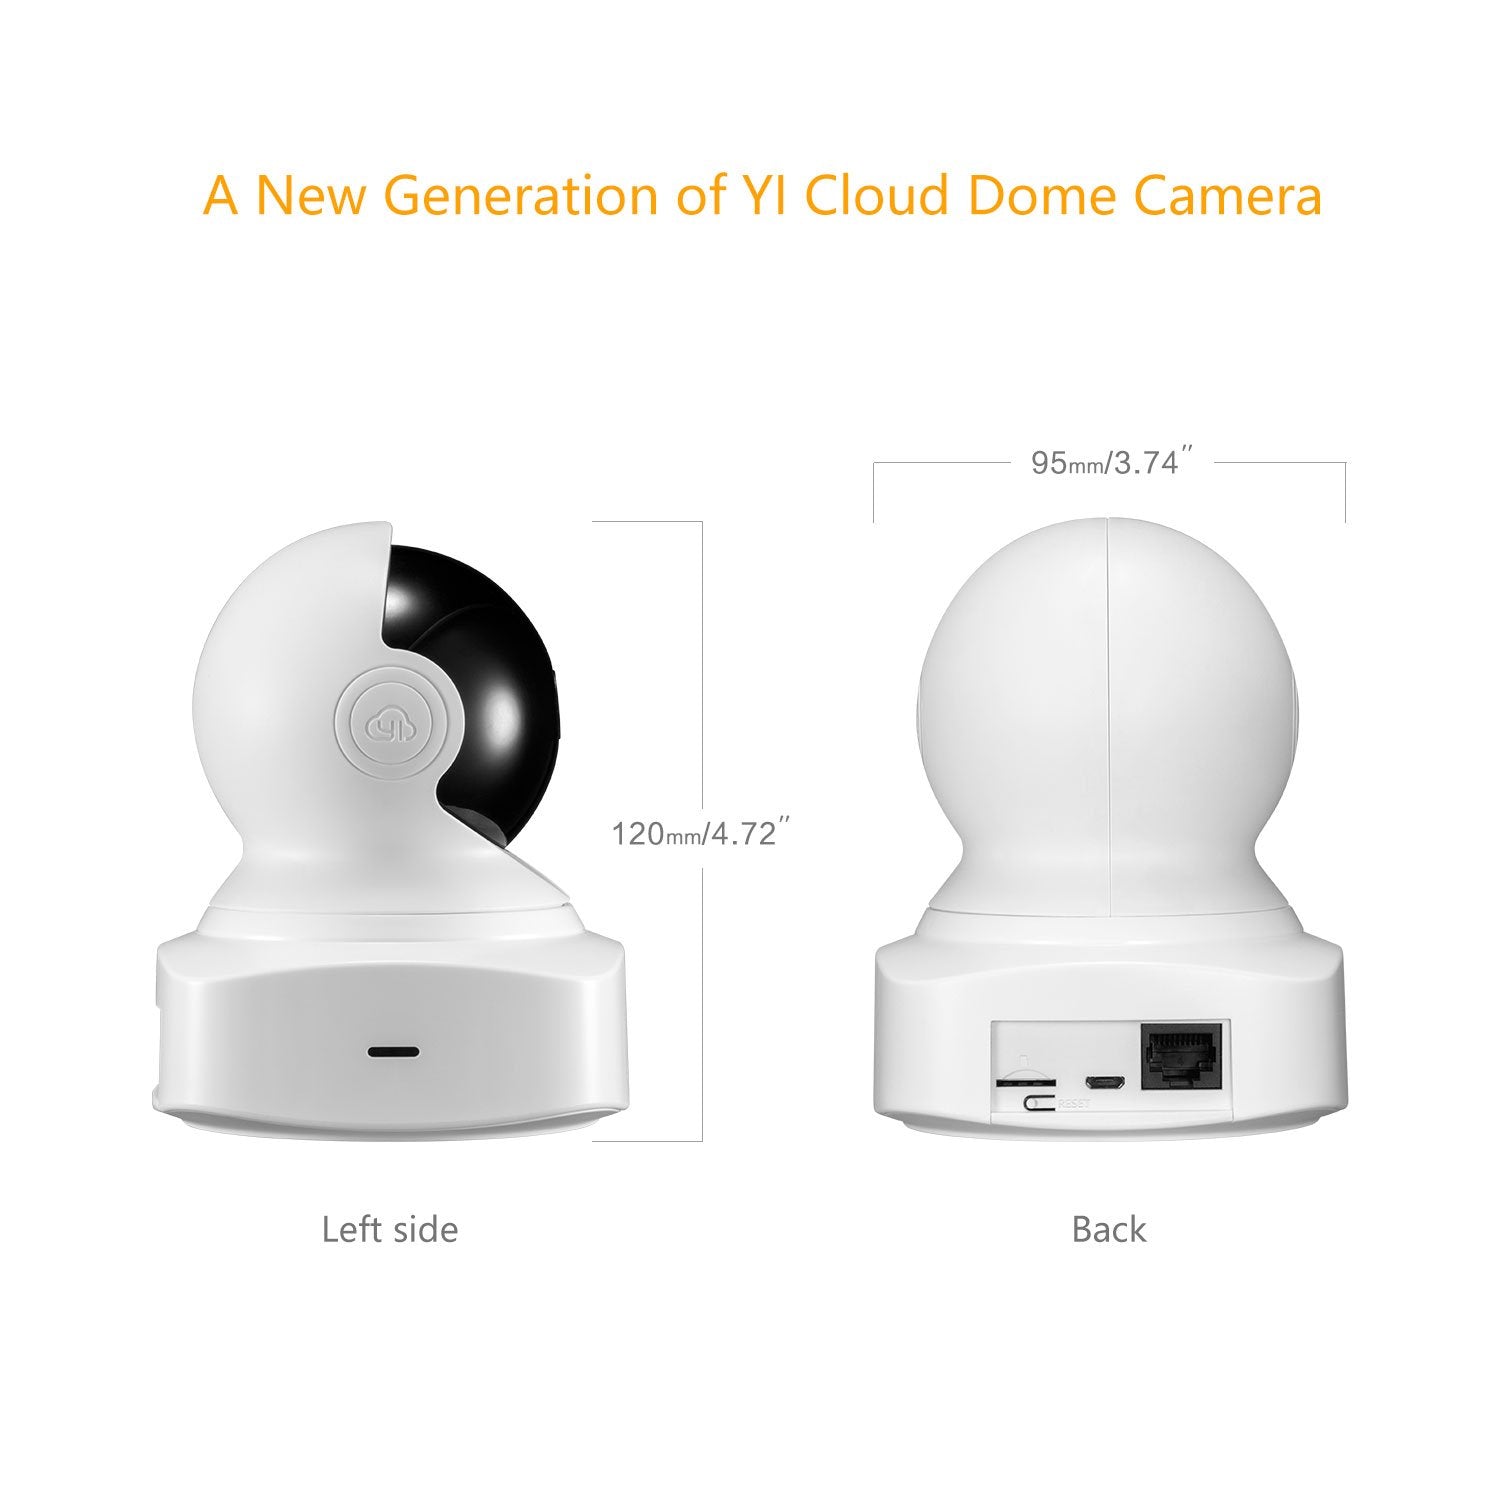 YI Cloud Dome Camera 1080P Full HD India 